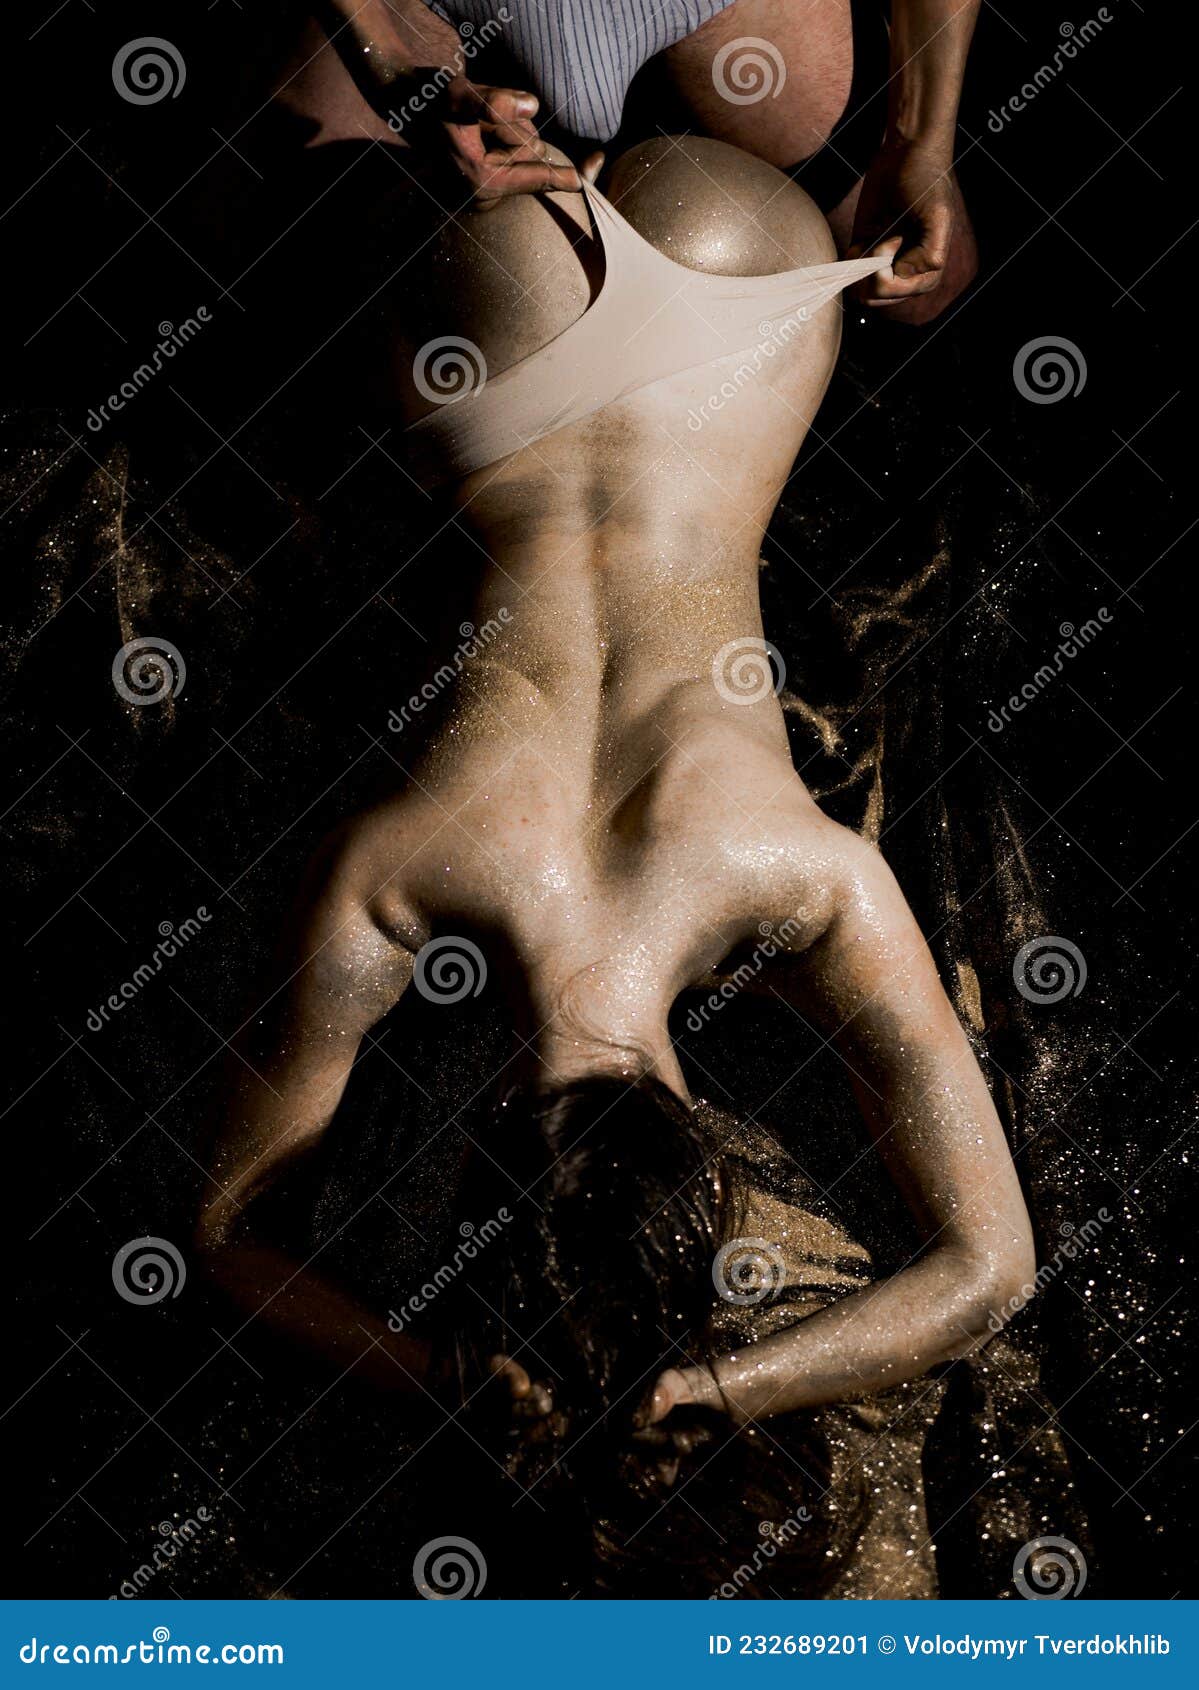 Naked girl and naked men - Sex photo